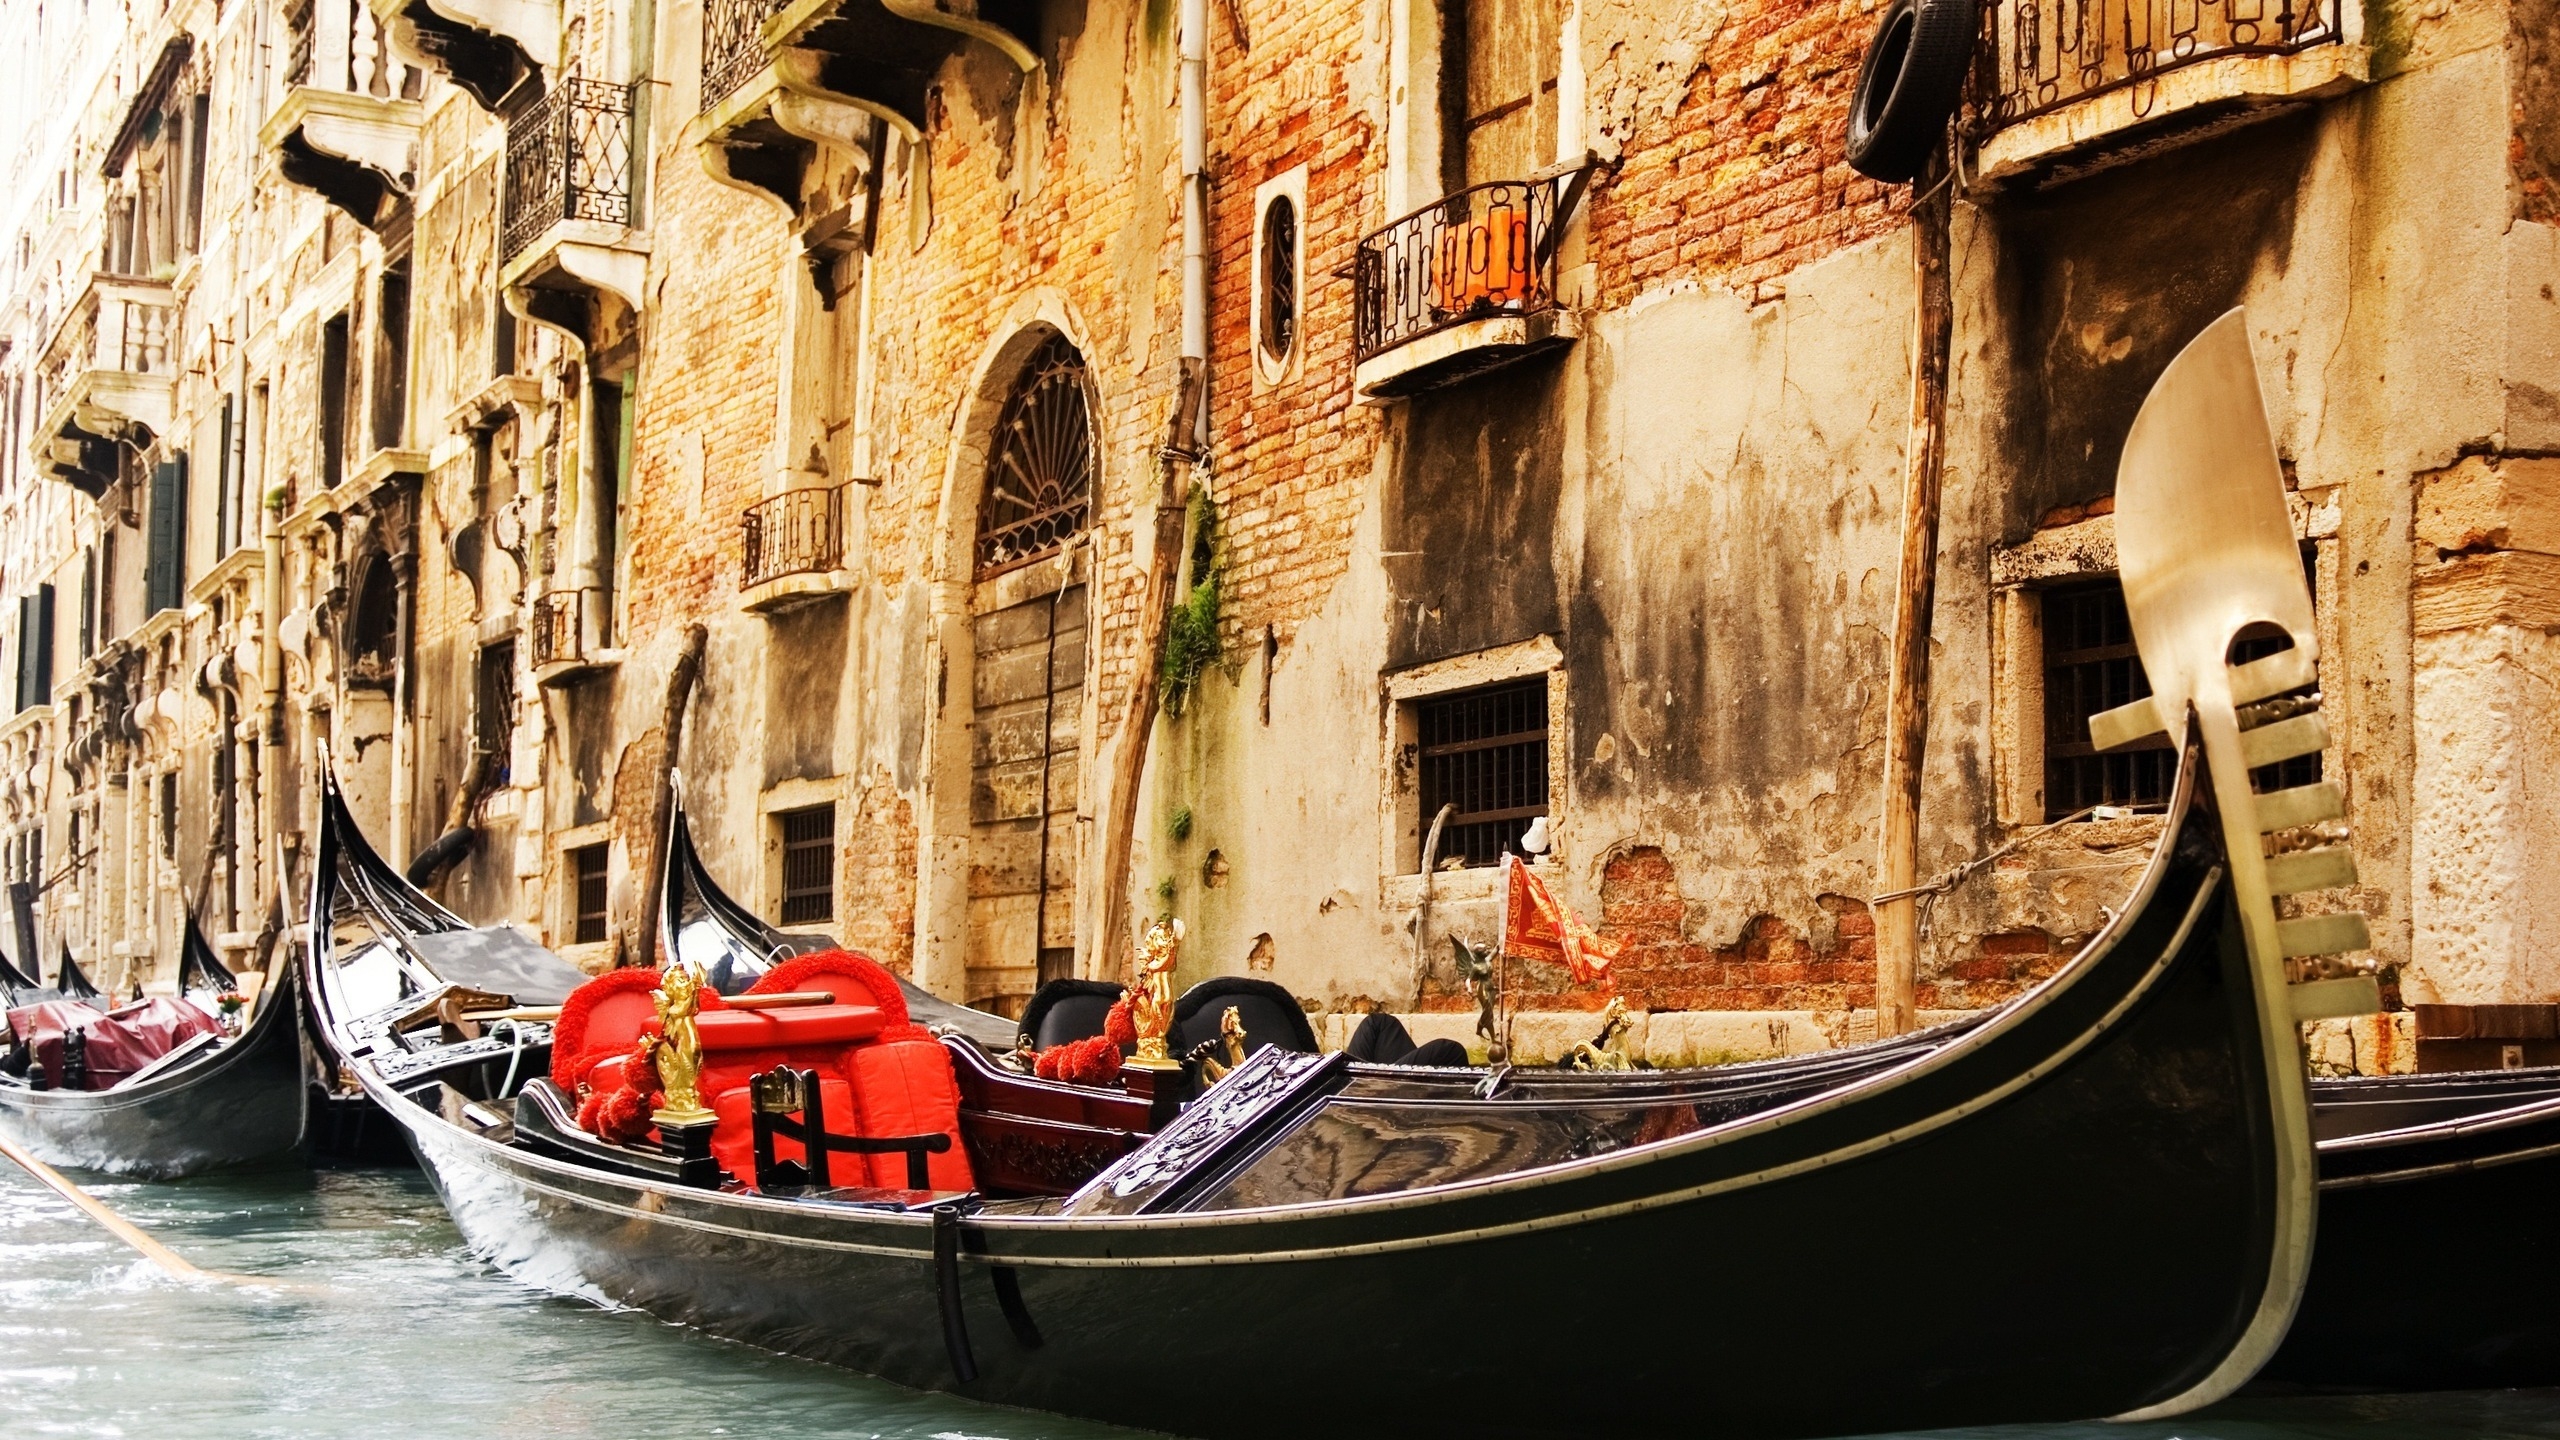 Venice Gondola for 2560x1440 HDTV resolution